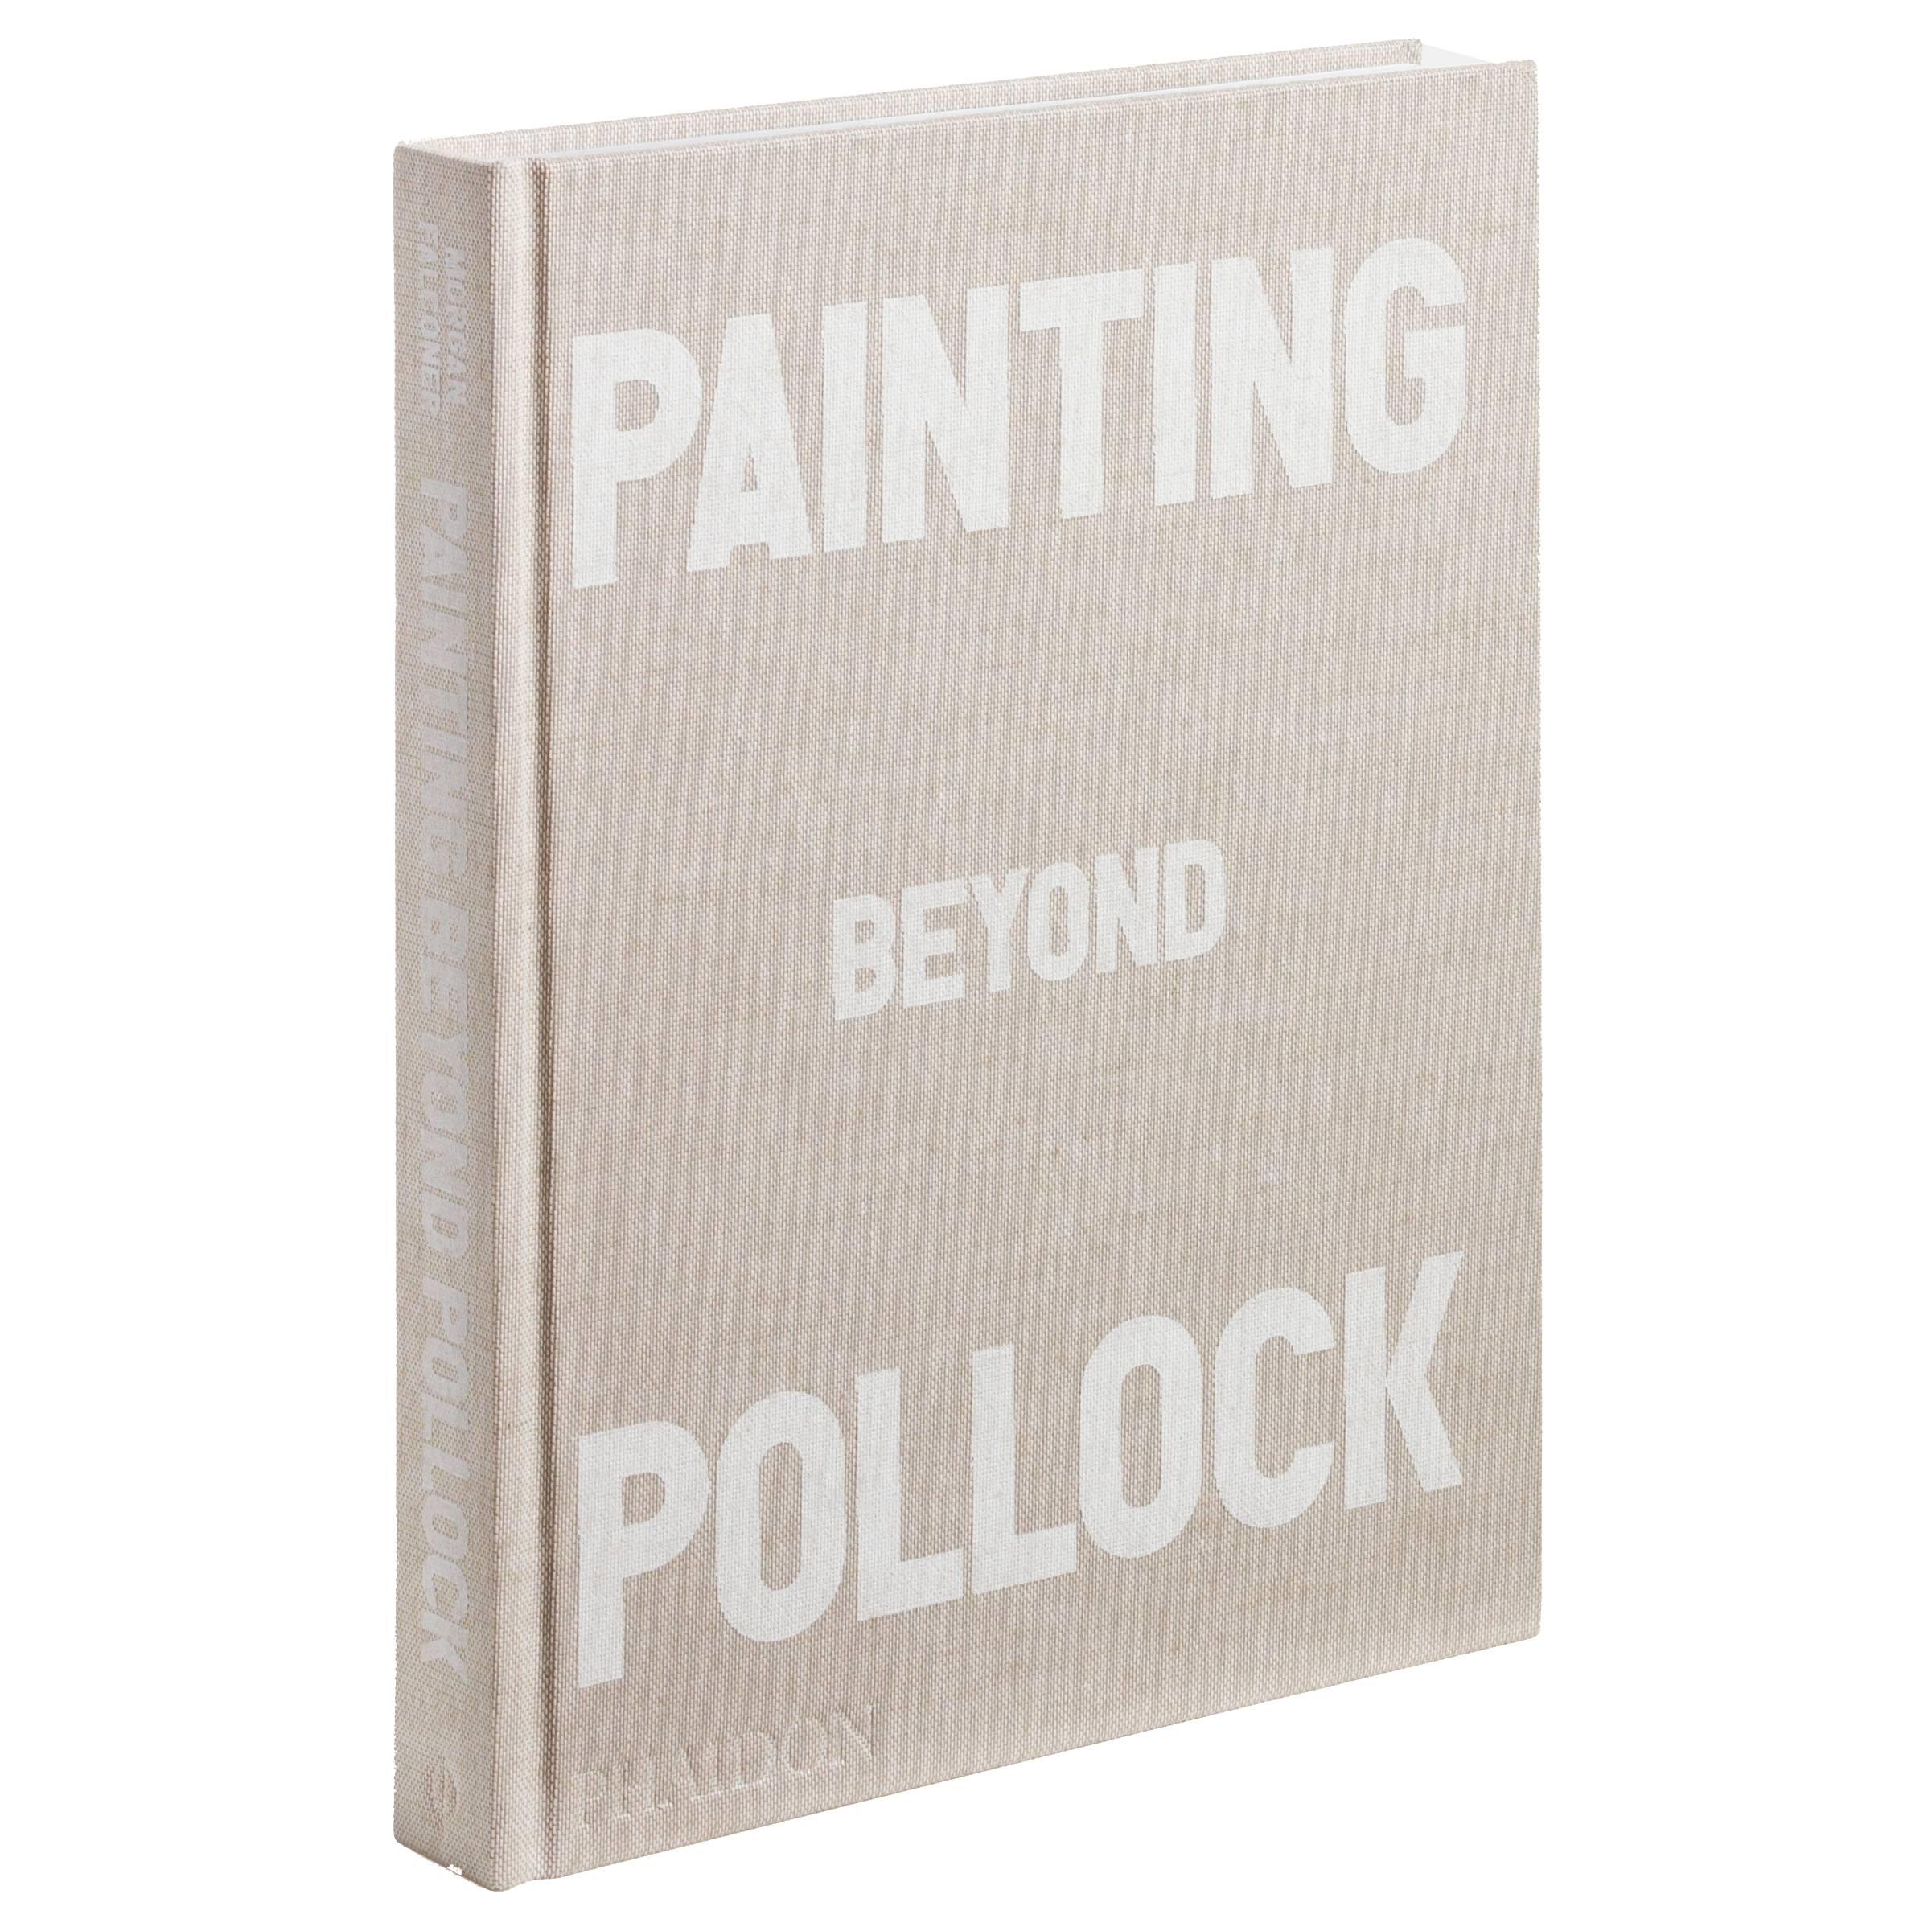 Painting Beyond Pollock Book